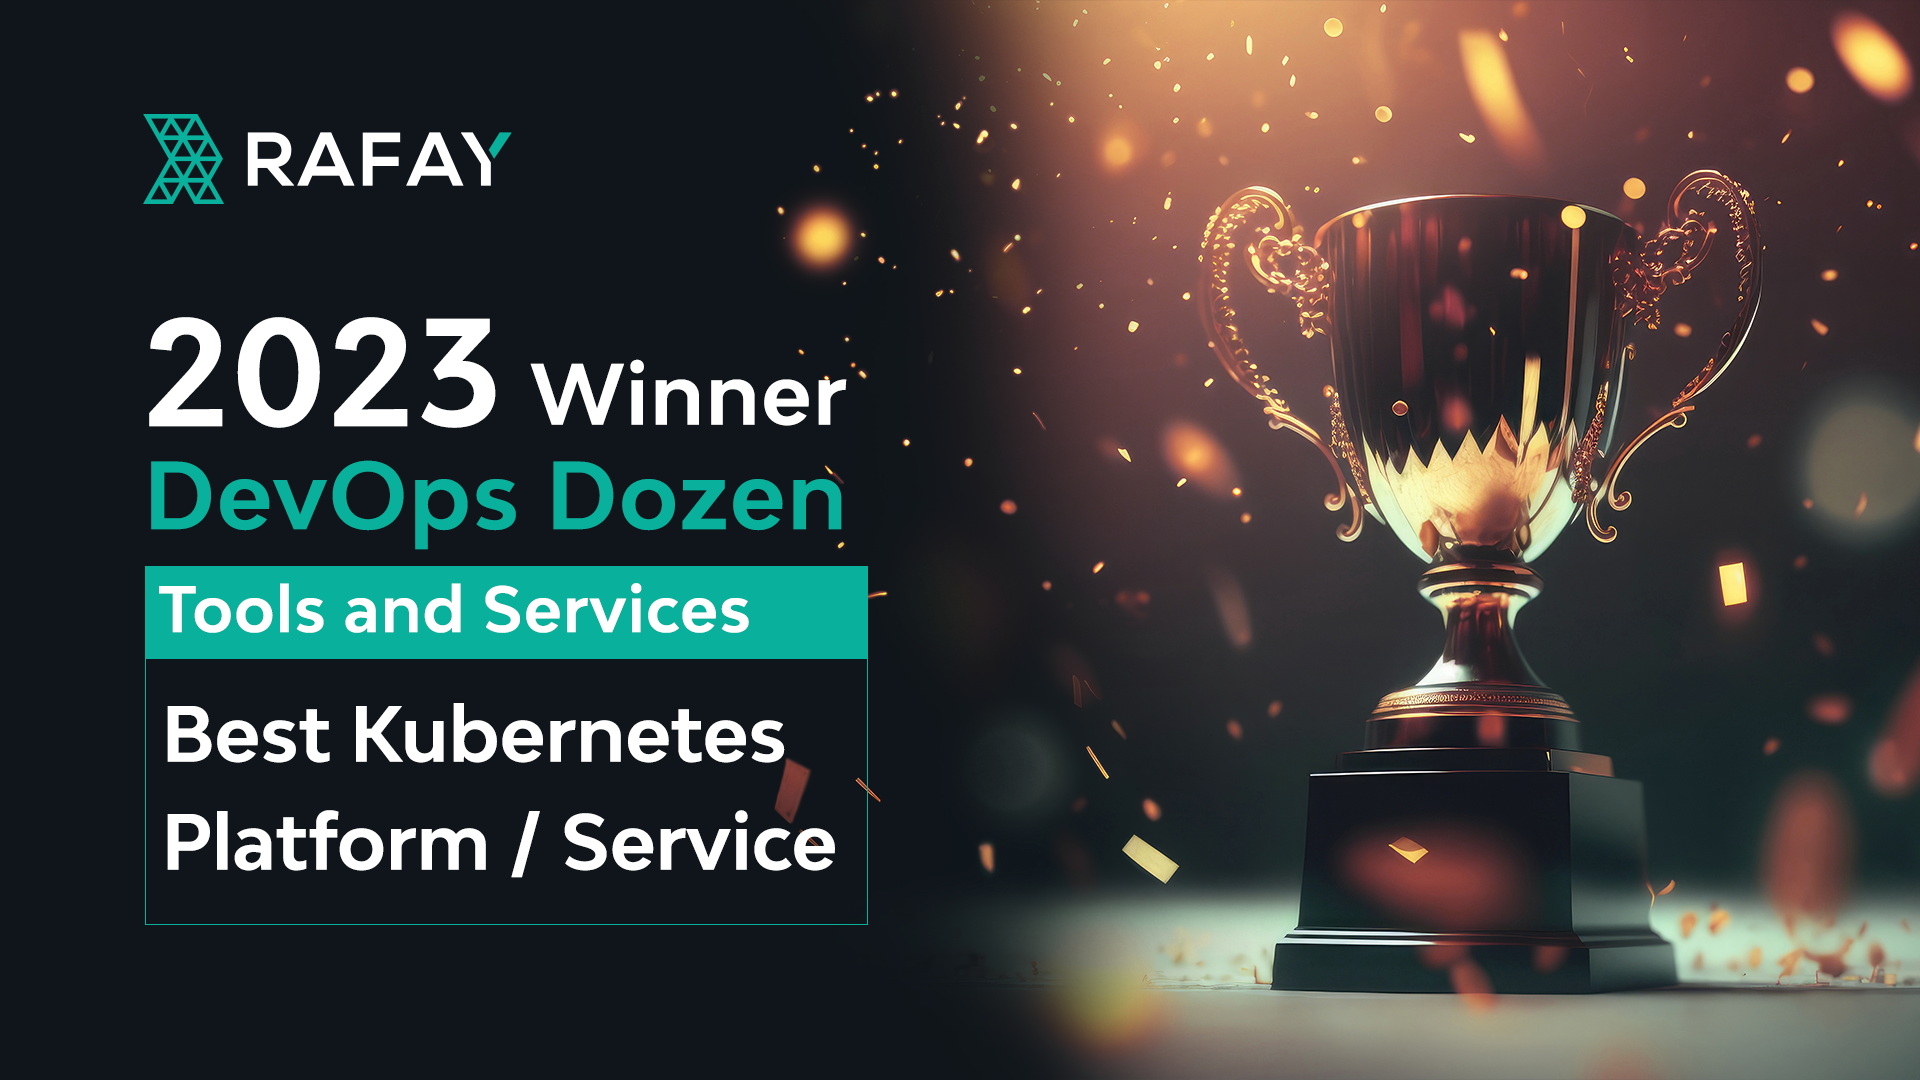 Image for Rafay is a DevOps Dozen Winner for the Best Kubernetes Platform/Service